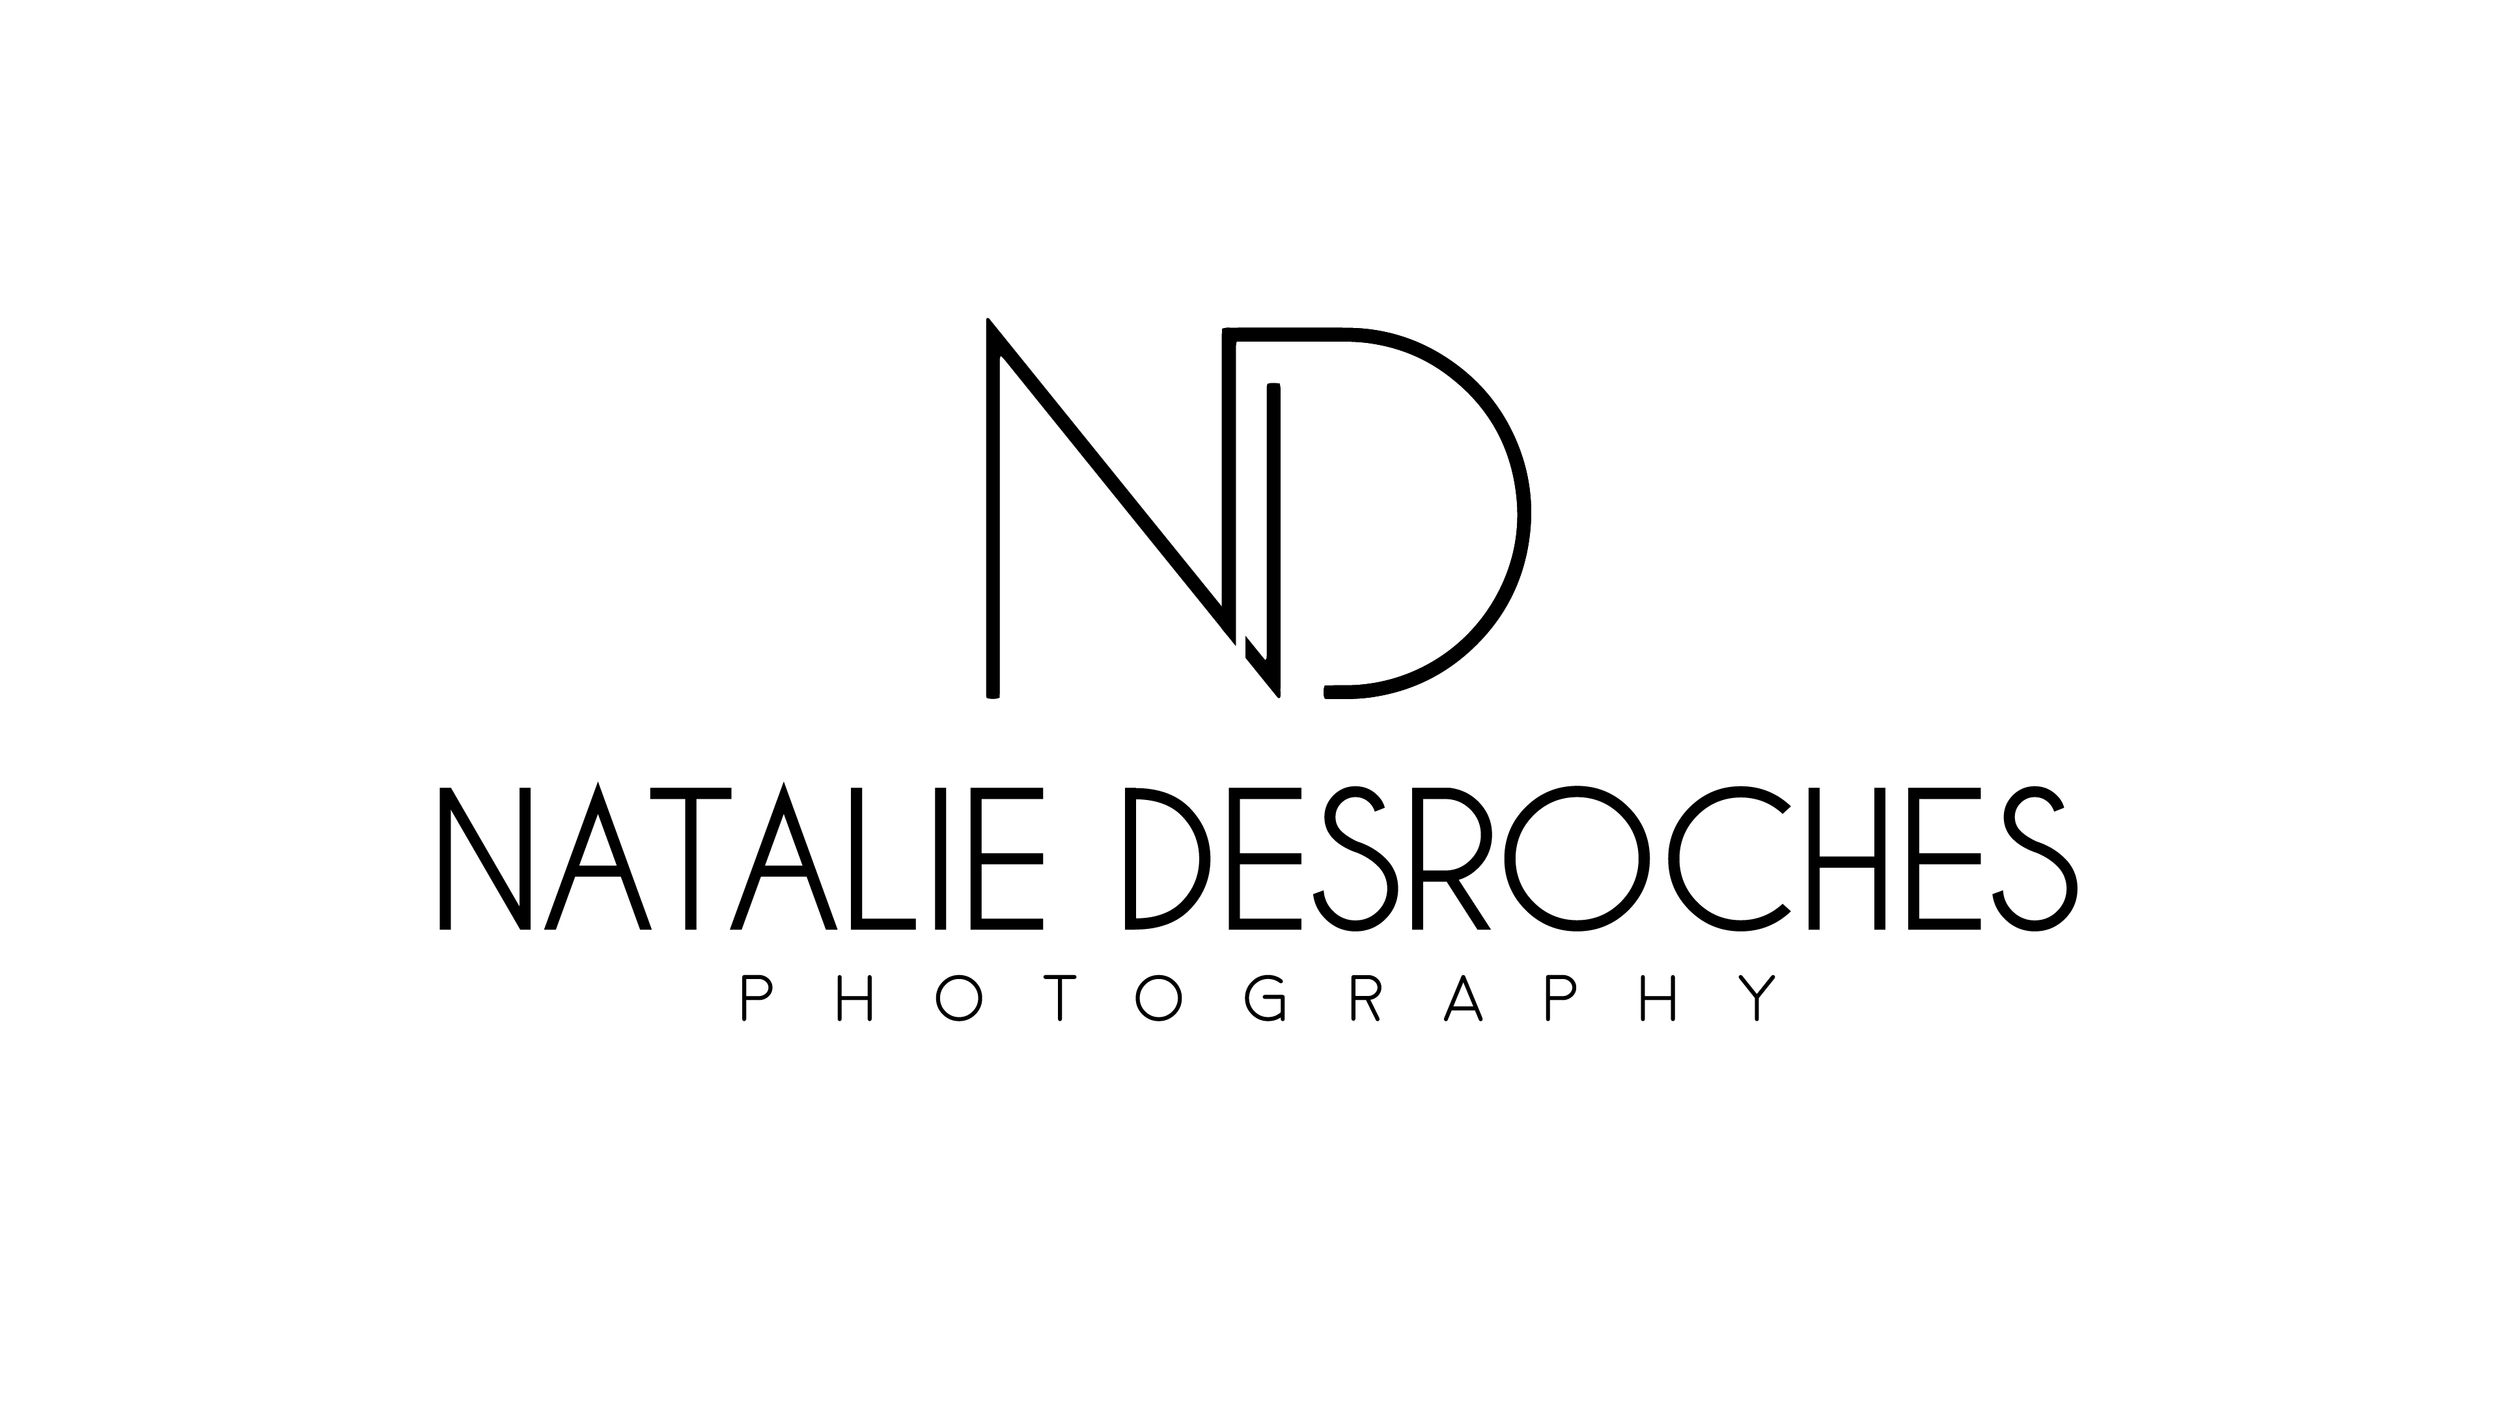 Natalie DesRoches Photography